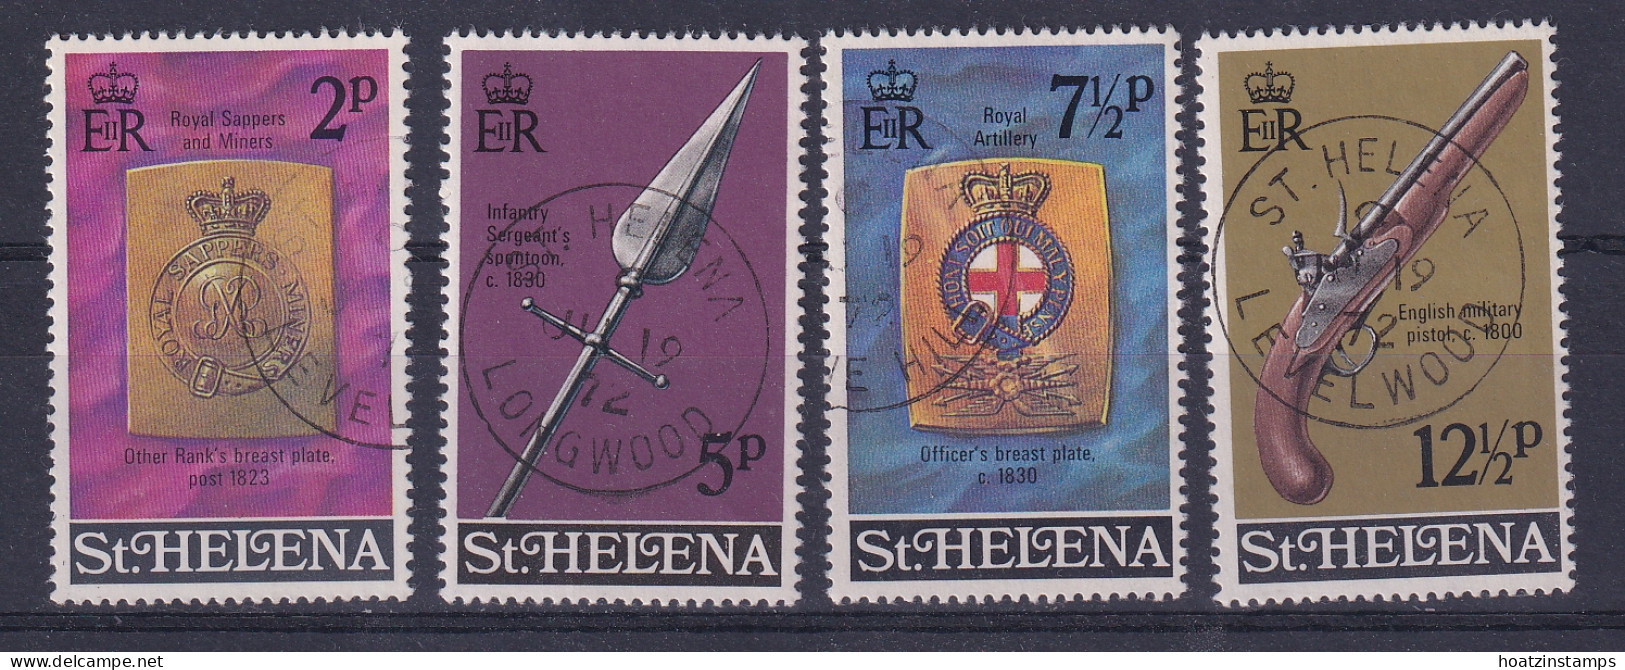 St Helena: 1972   Military Equipment (Issue 3)    Used - St. Helena